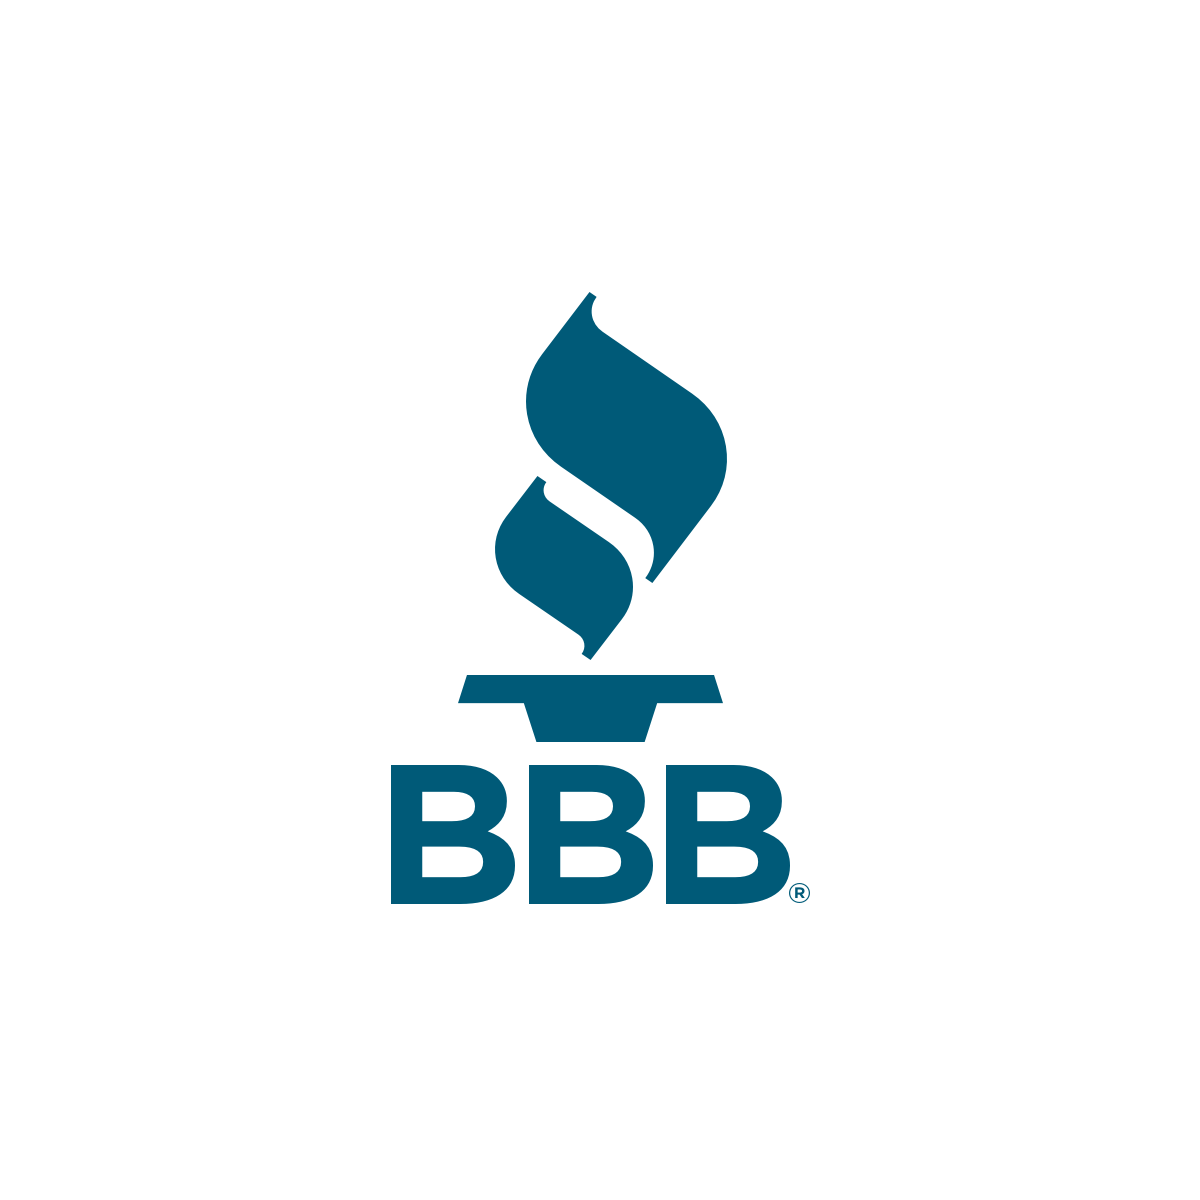 Прокси-сервер BBB (Better Business Bureau)